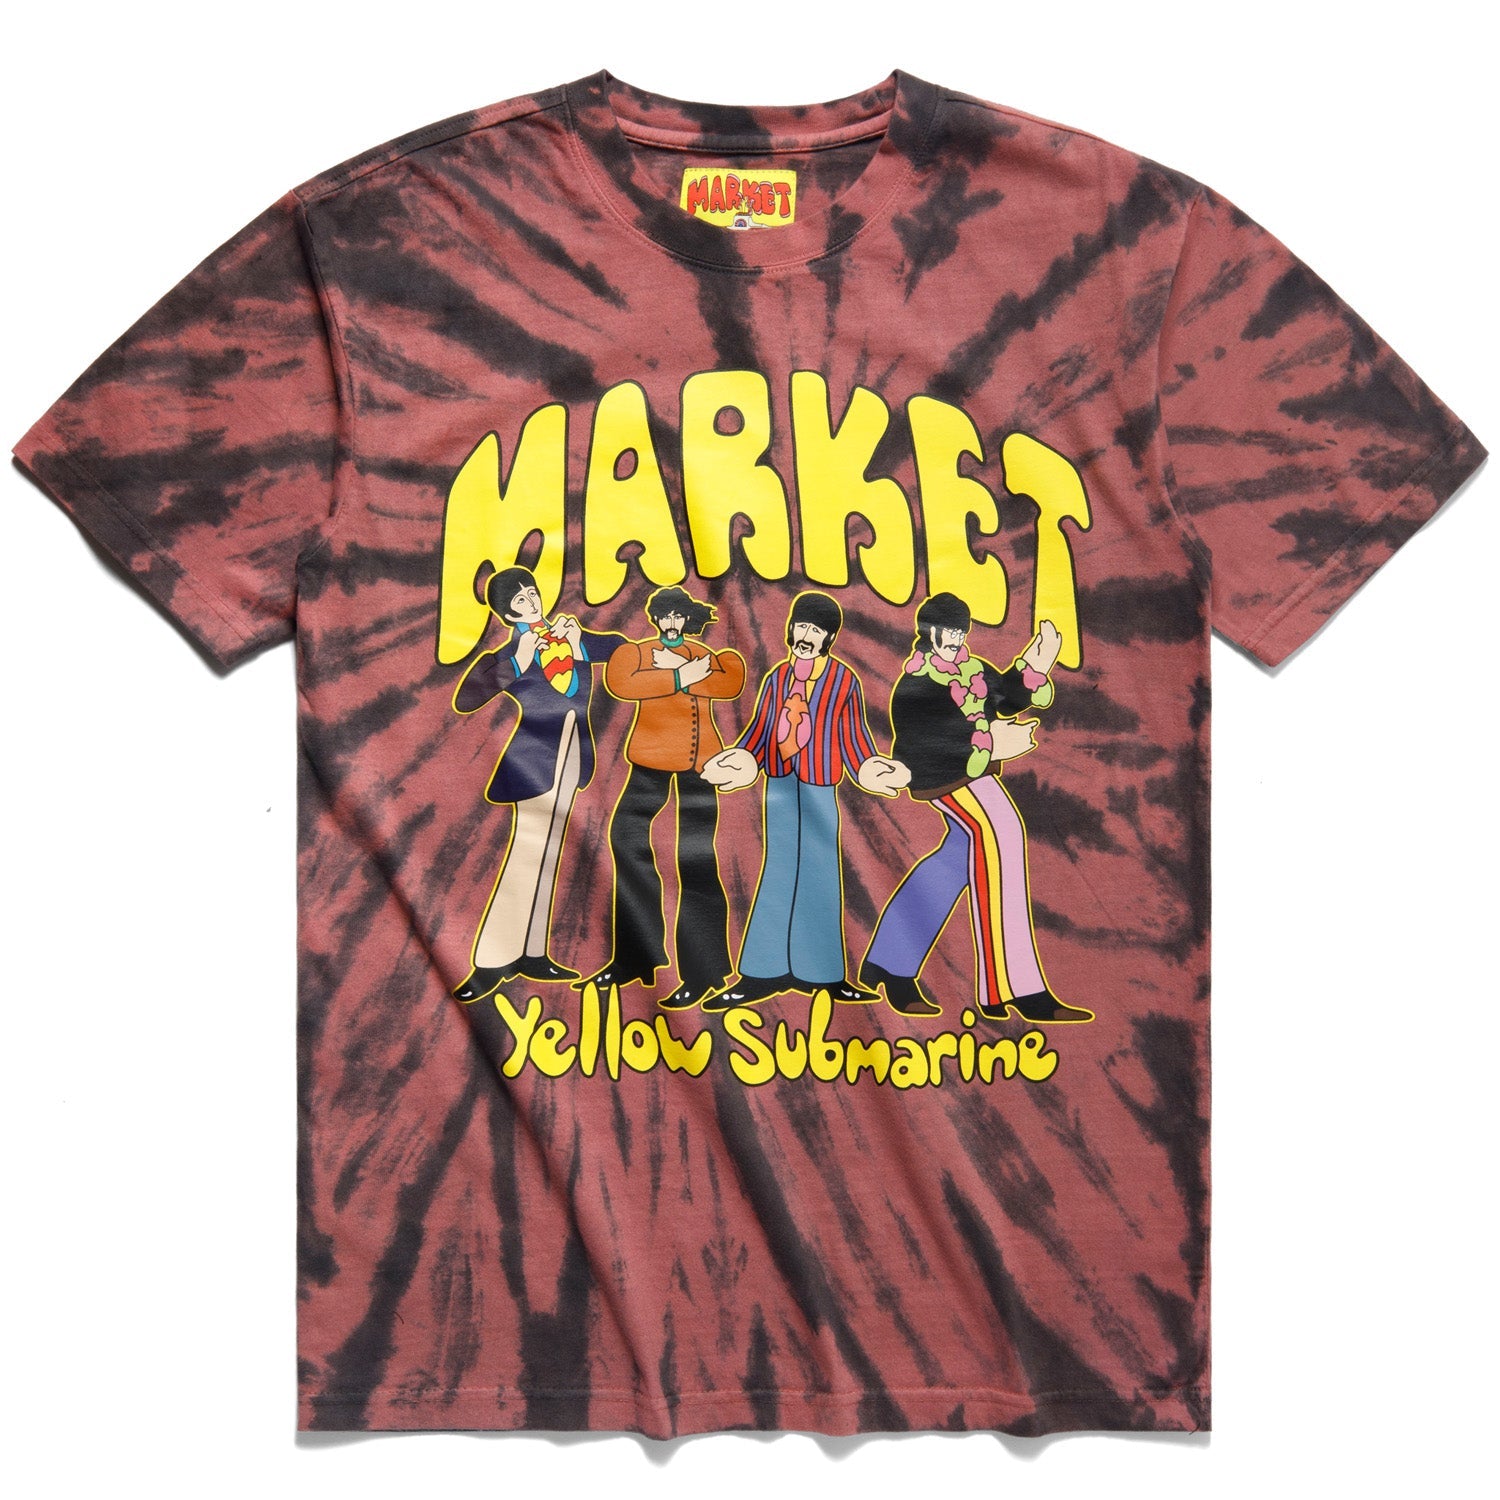 Market Men x Beatles Yellow Submarine Pose T-Shirt Red Tie Dye - T-SHIRTS - Canada